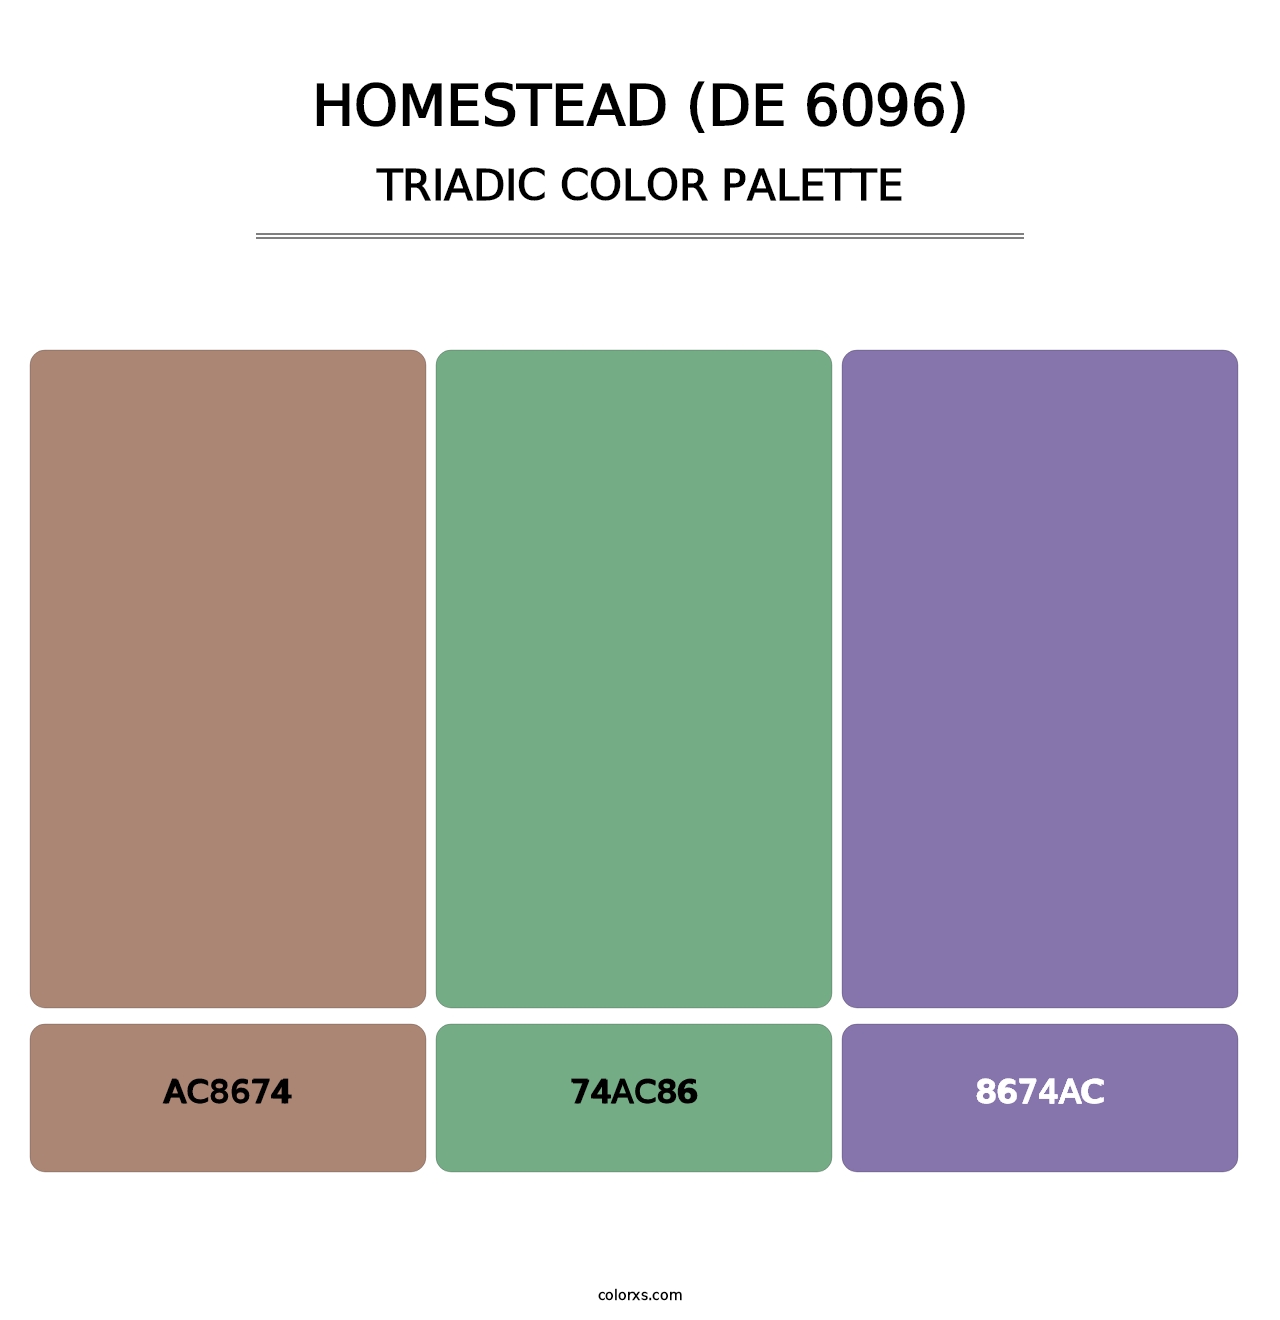 Homestead (DE 6096) - Triadic Color Palette